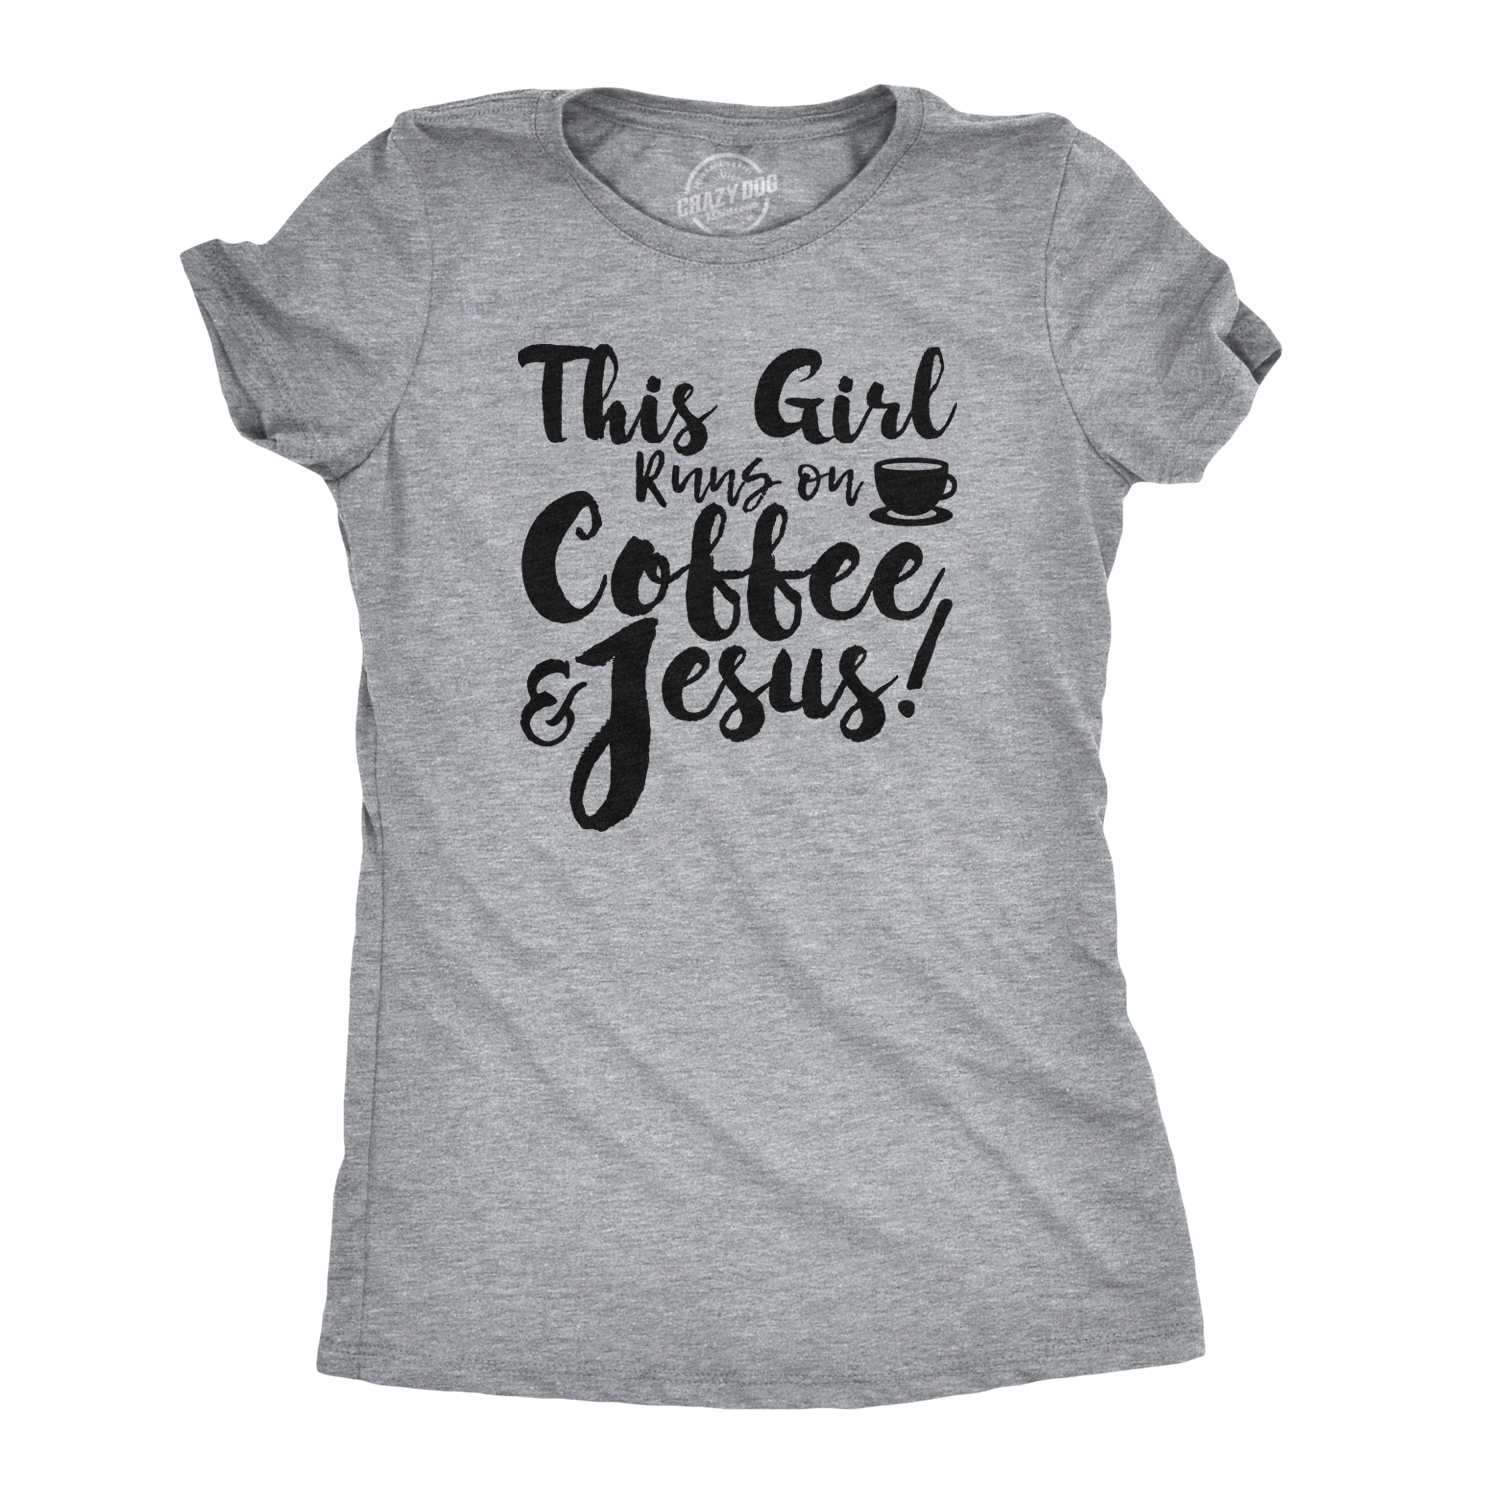 Crazy Dog Tshirts Womens This Girl Runs Off Coffee And Jesus T Shirt Funny Faith Church Cool Tee